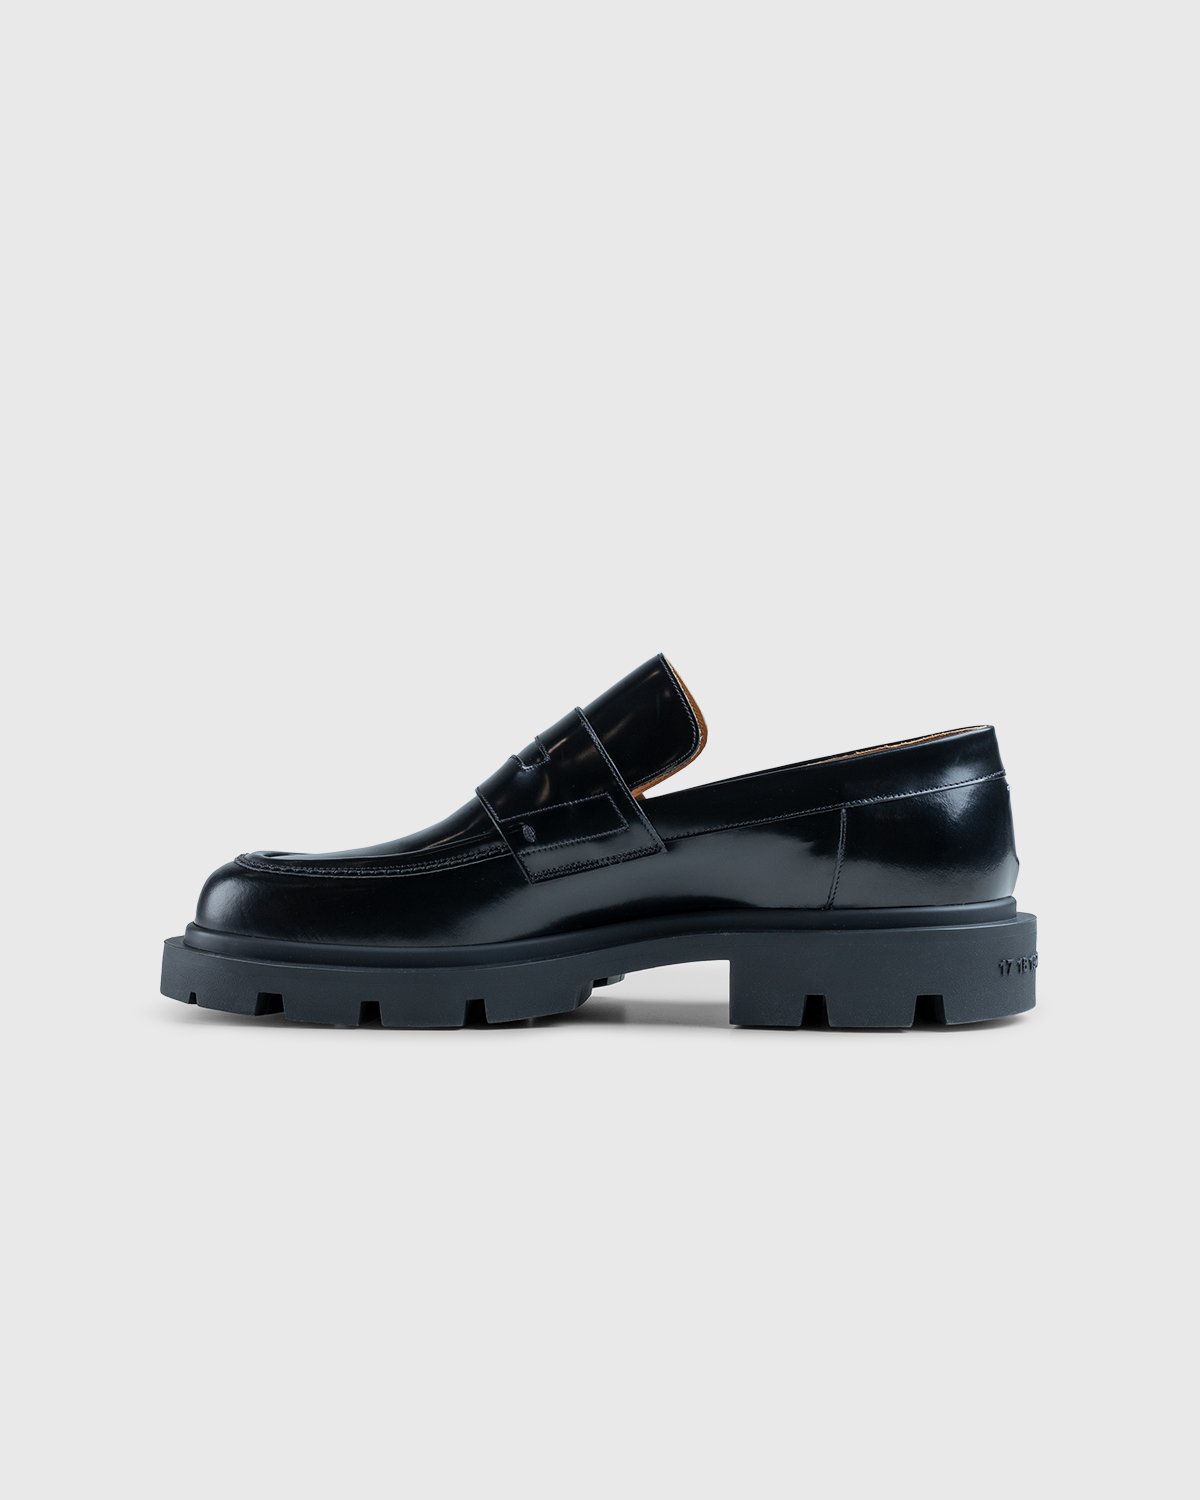 Maison Margiela - Leather Loafers Black - Footwear - Black - Image 7